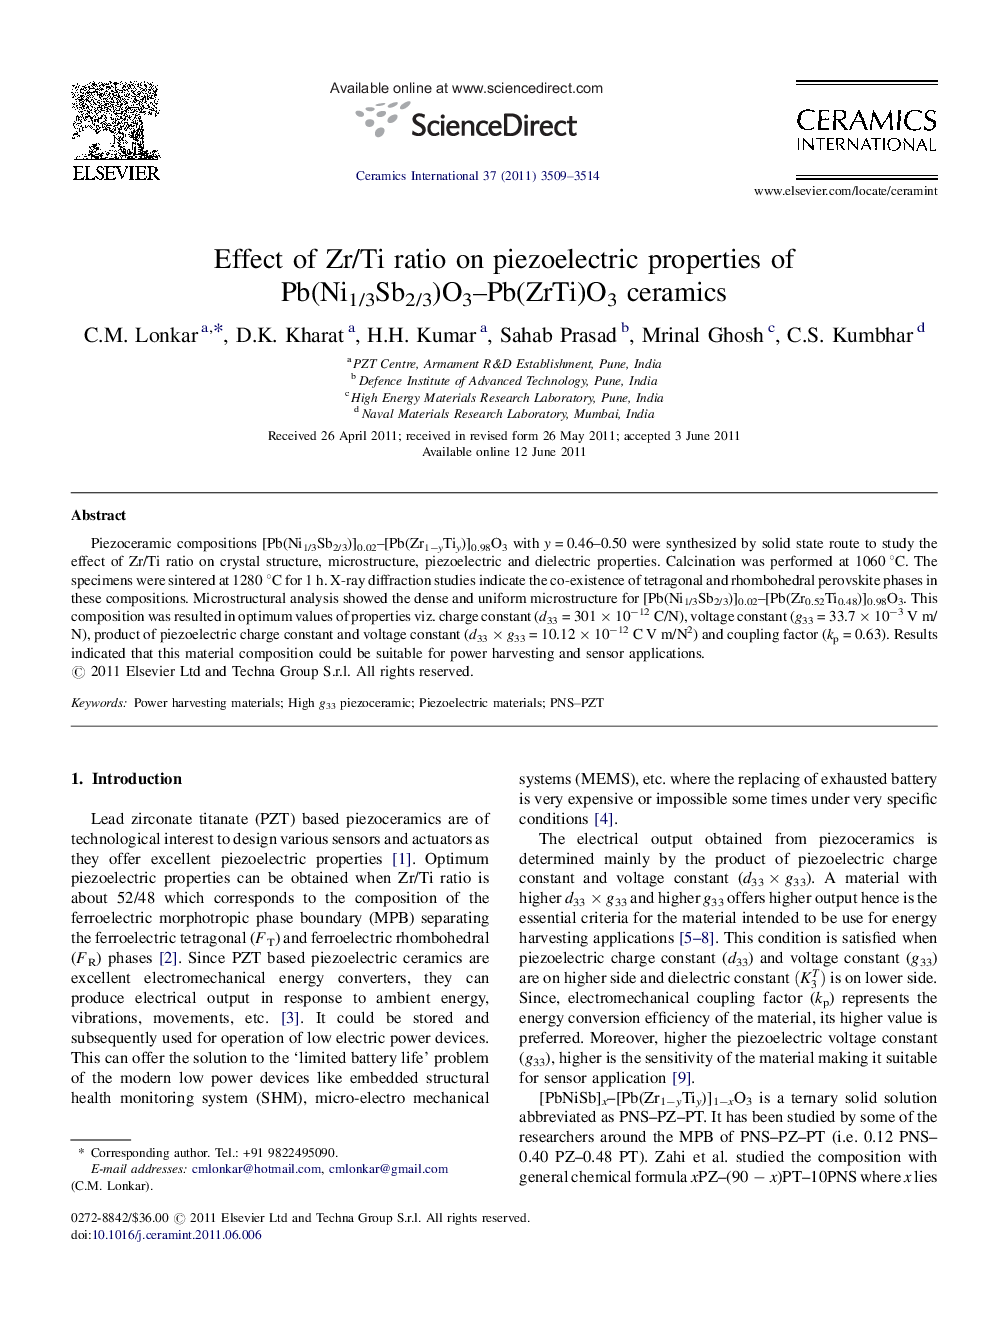 Effect of Zr/Ti ratio on piezoelectric properties of Pb(Ni1/3Sb2/3)O3–Pb(ZrTi)O3 ceramics